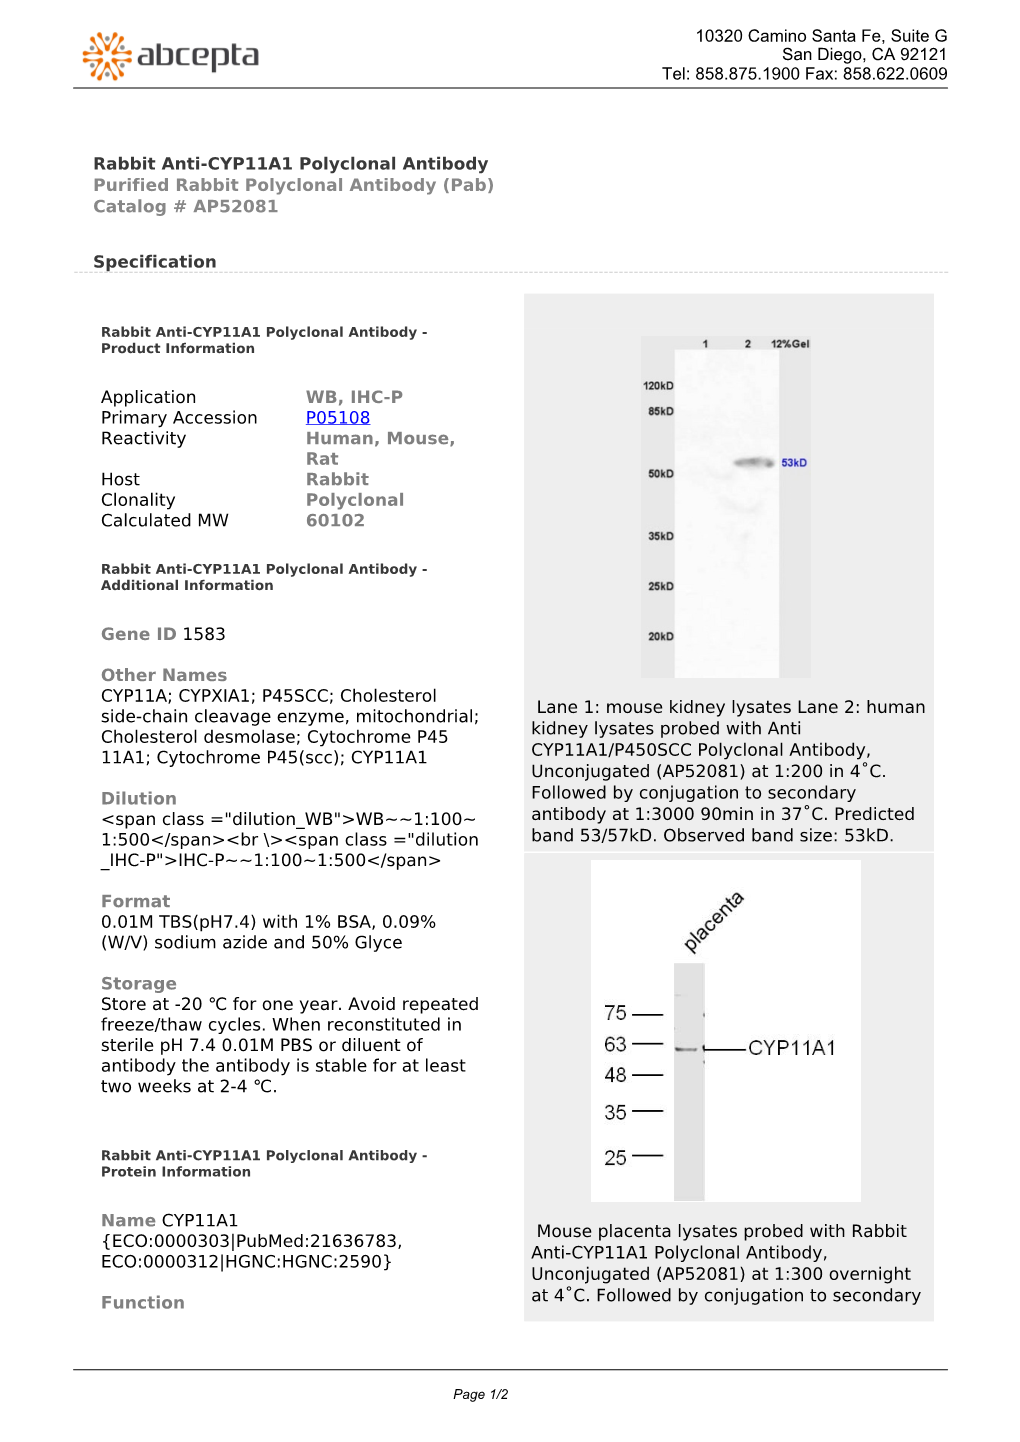 Rabbit Anti-CYP11A1 Polyclonal Antibody Purified Rabbit Polyclonal Antibody (Pab) Catalog # AP52081